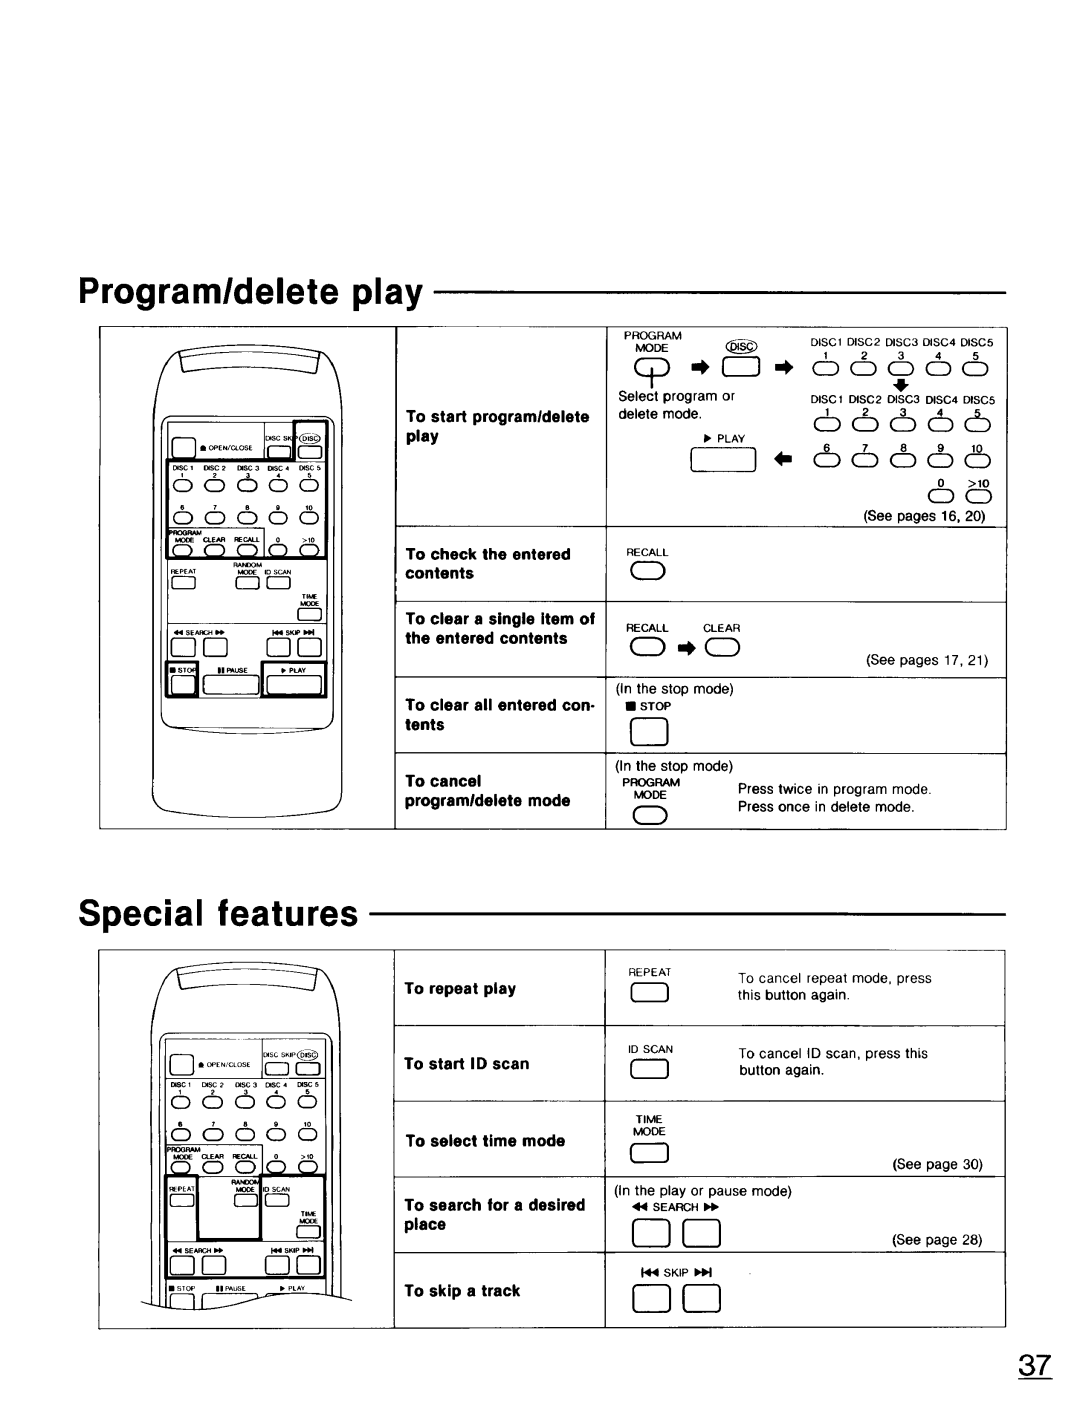 Technics SL-PD947 Programldelete play, c p, ooooo4, Special features, F-----I . 6 cb oo6s, 06660, O- O, 6666o, Nr r, o6cb 